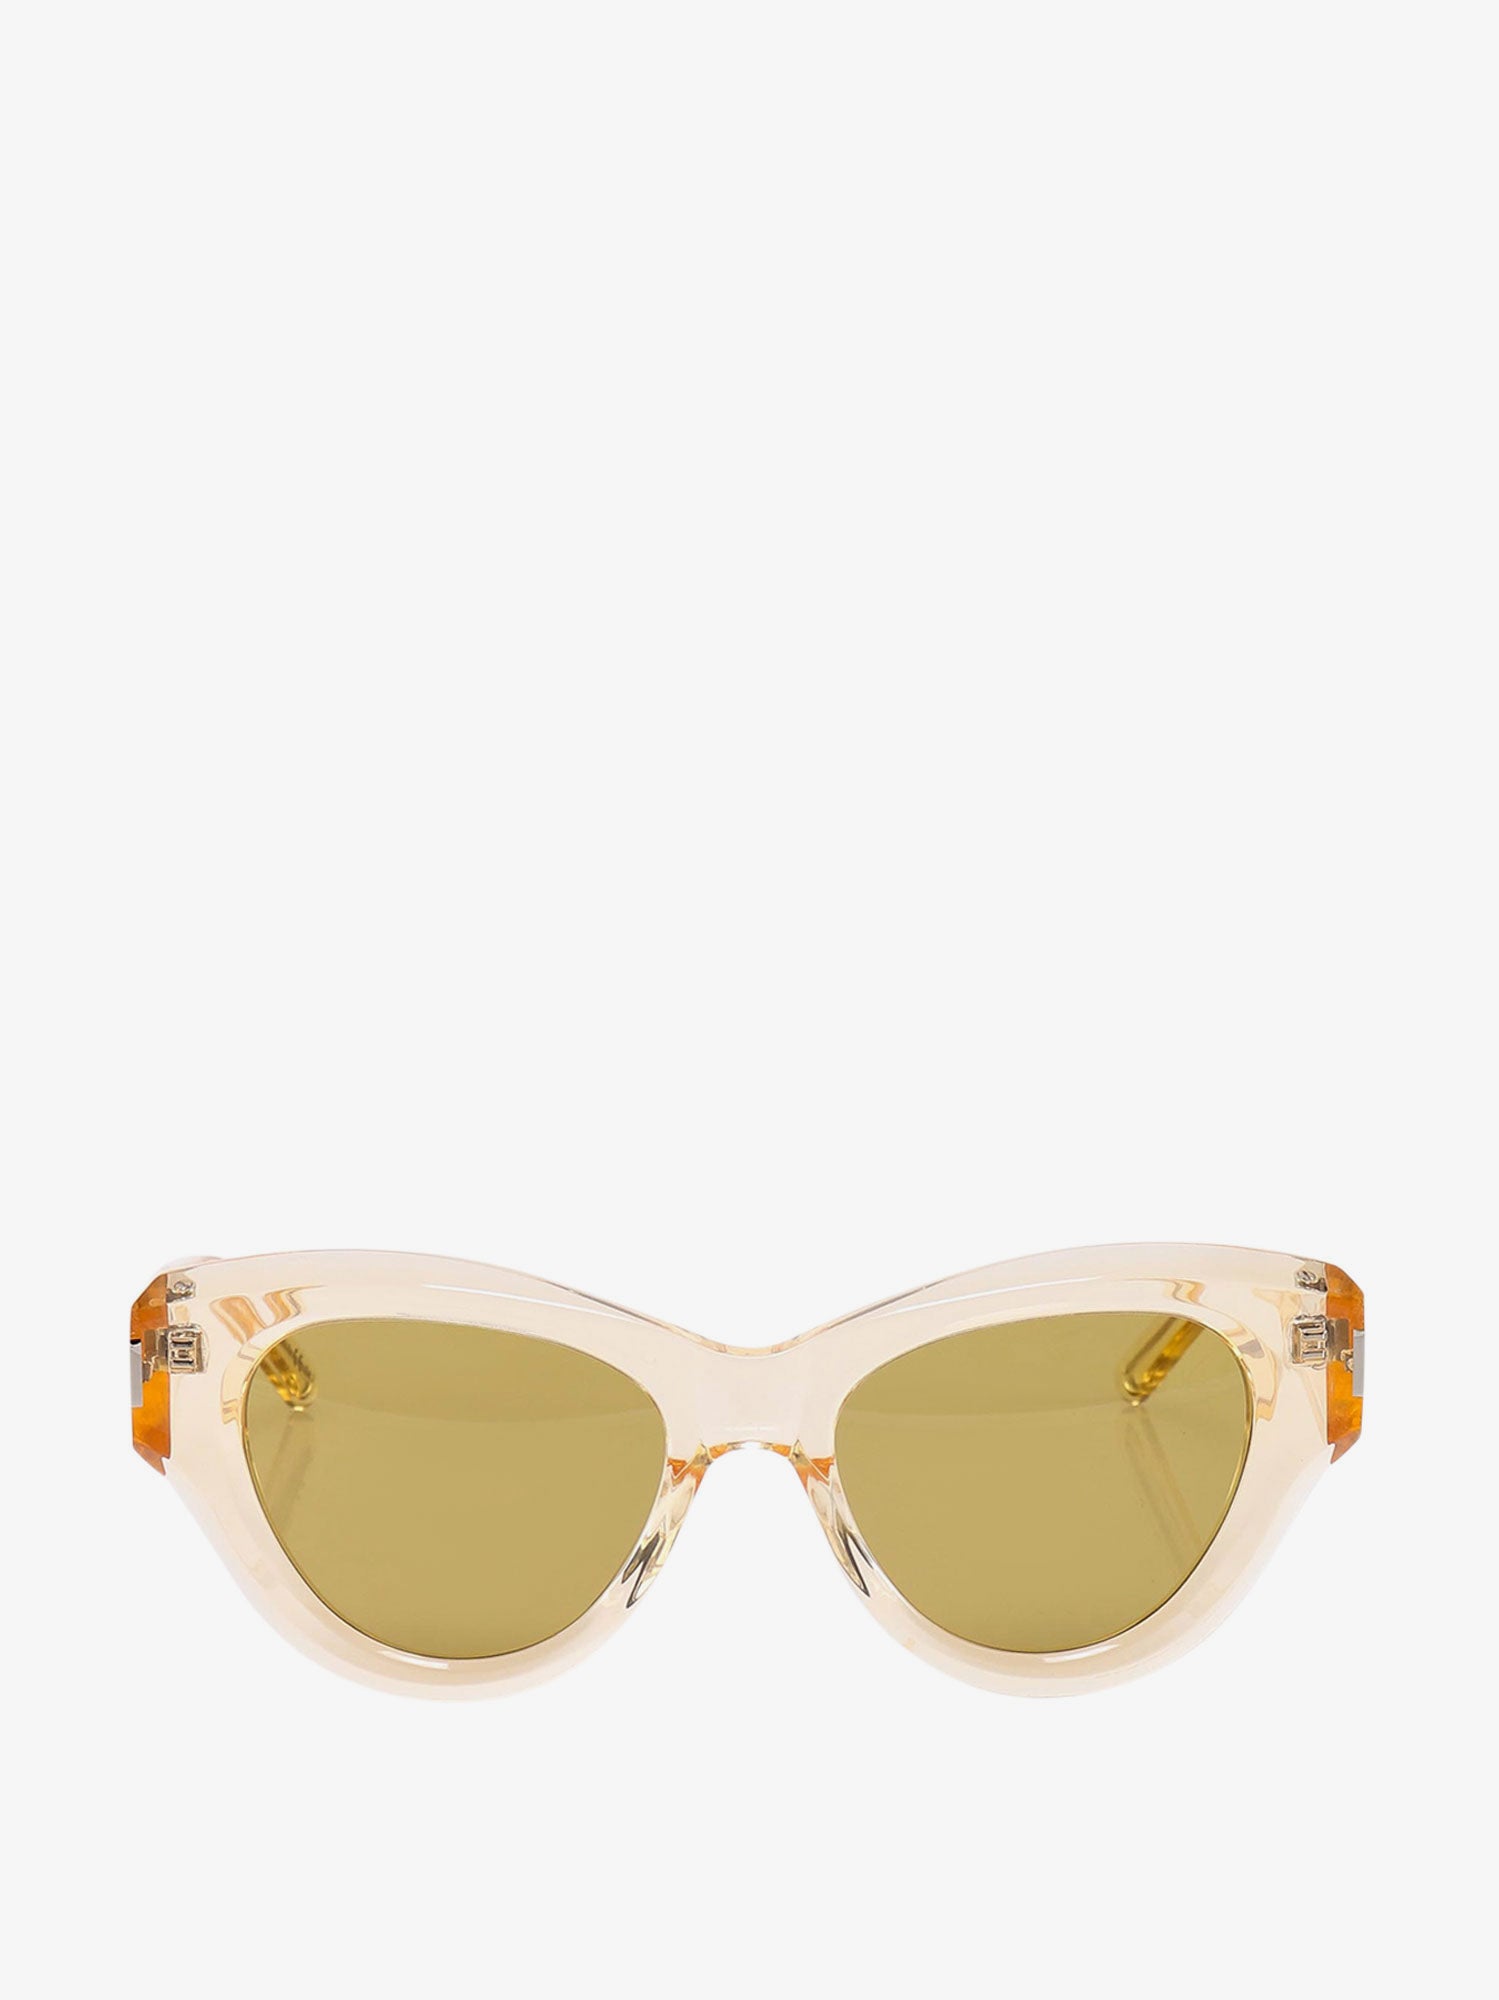 Saint Laurent Sunglasses In Yellow